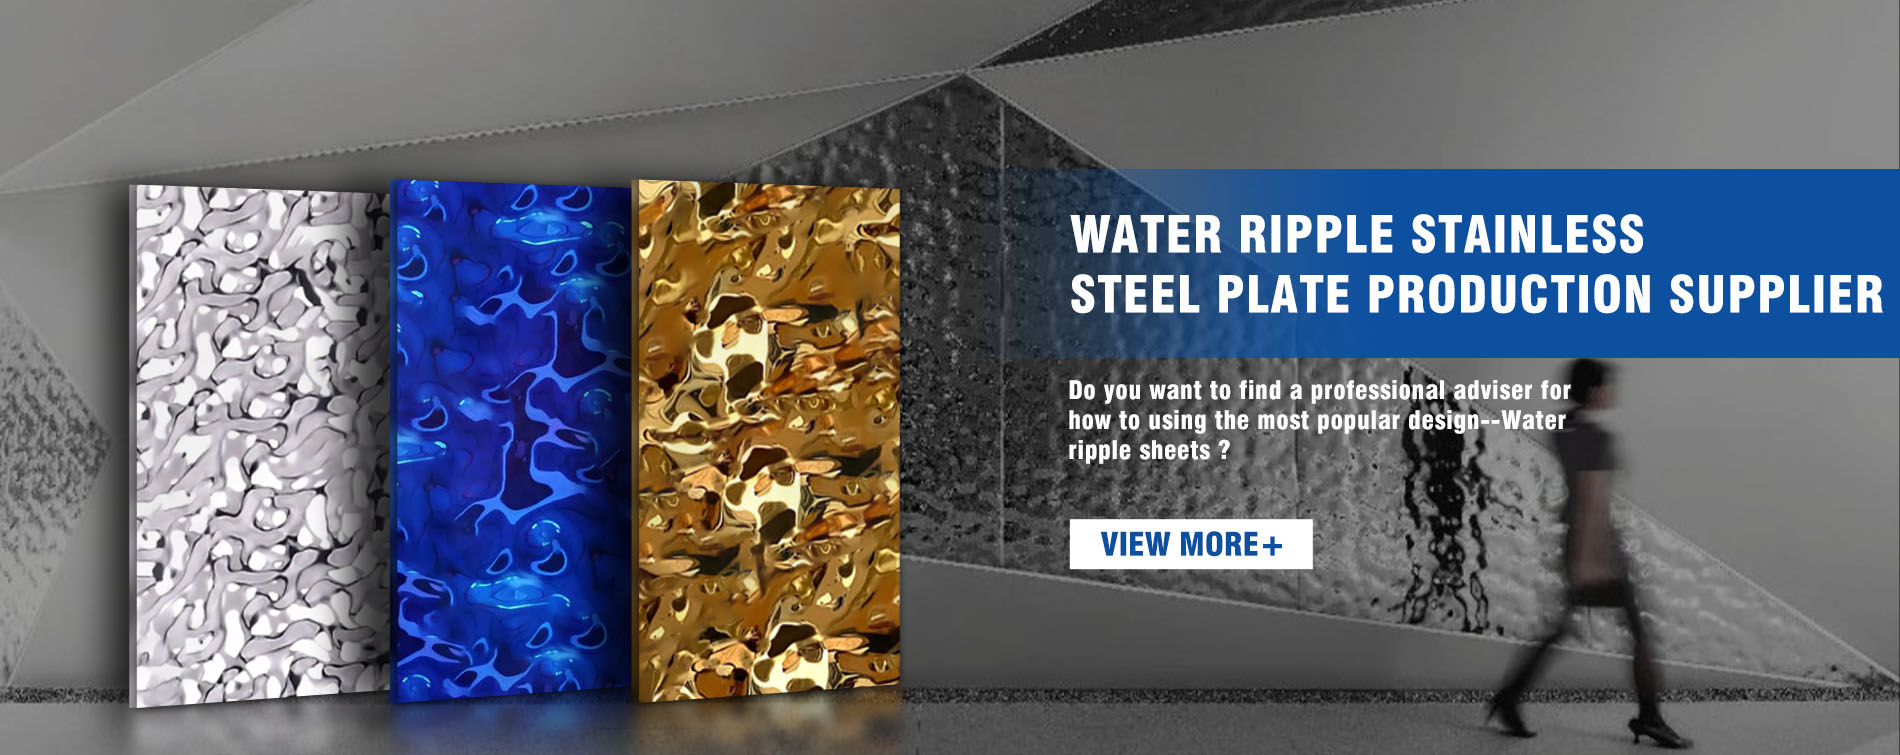 Stainless Steel Water Ripple Sheet